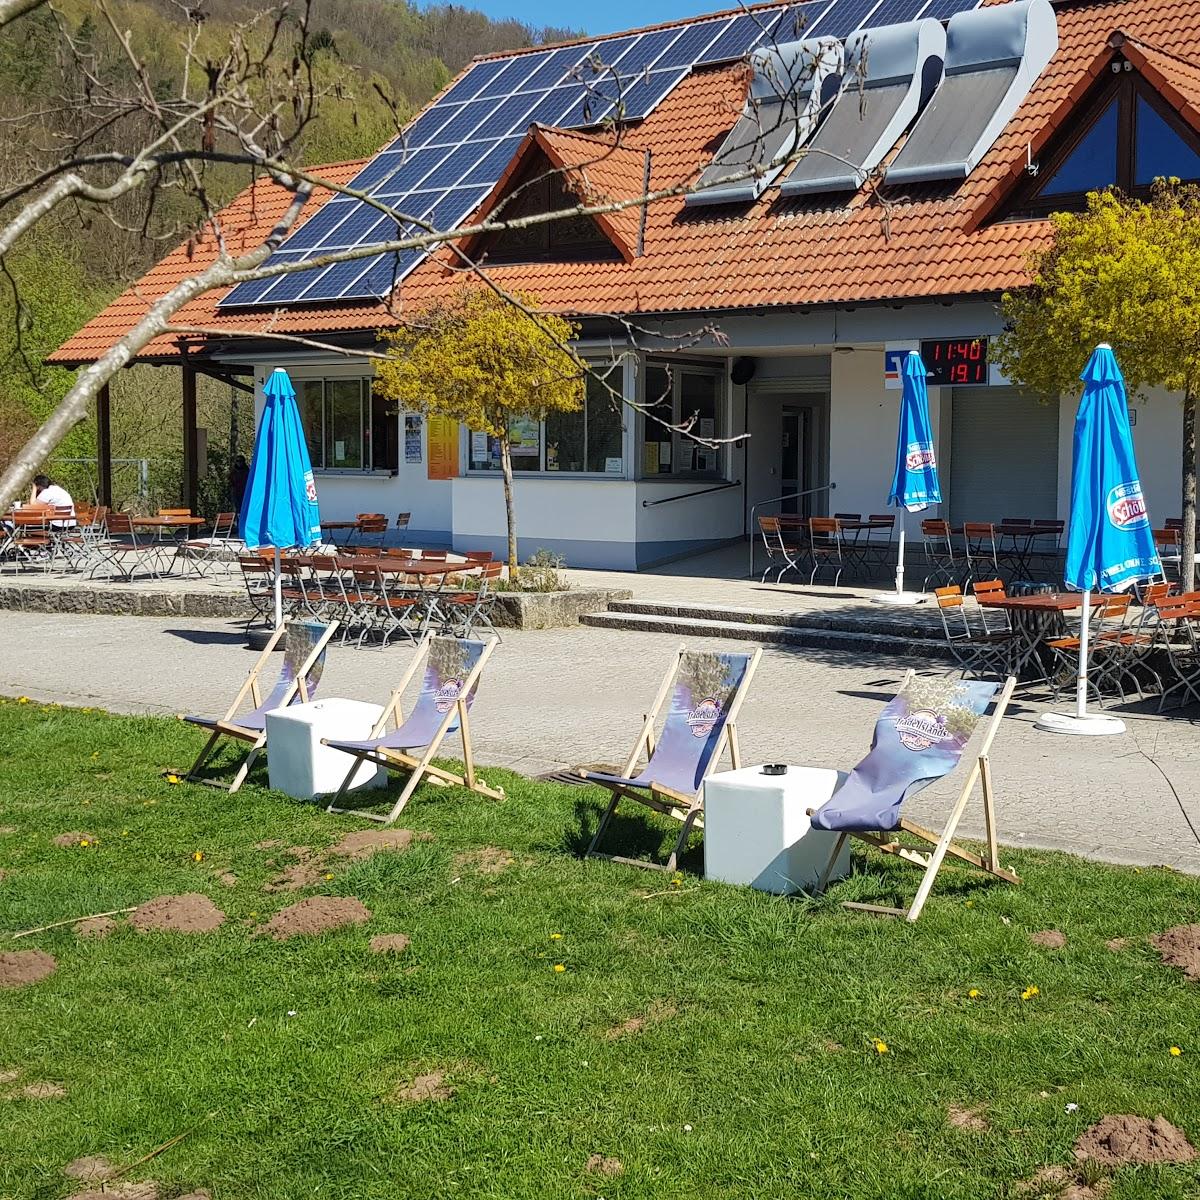 Restaurant "Sun Valley" in Trebgast